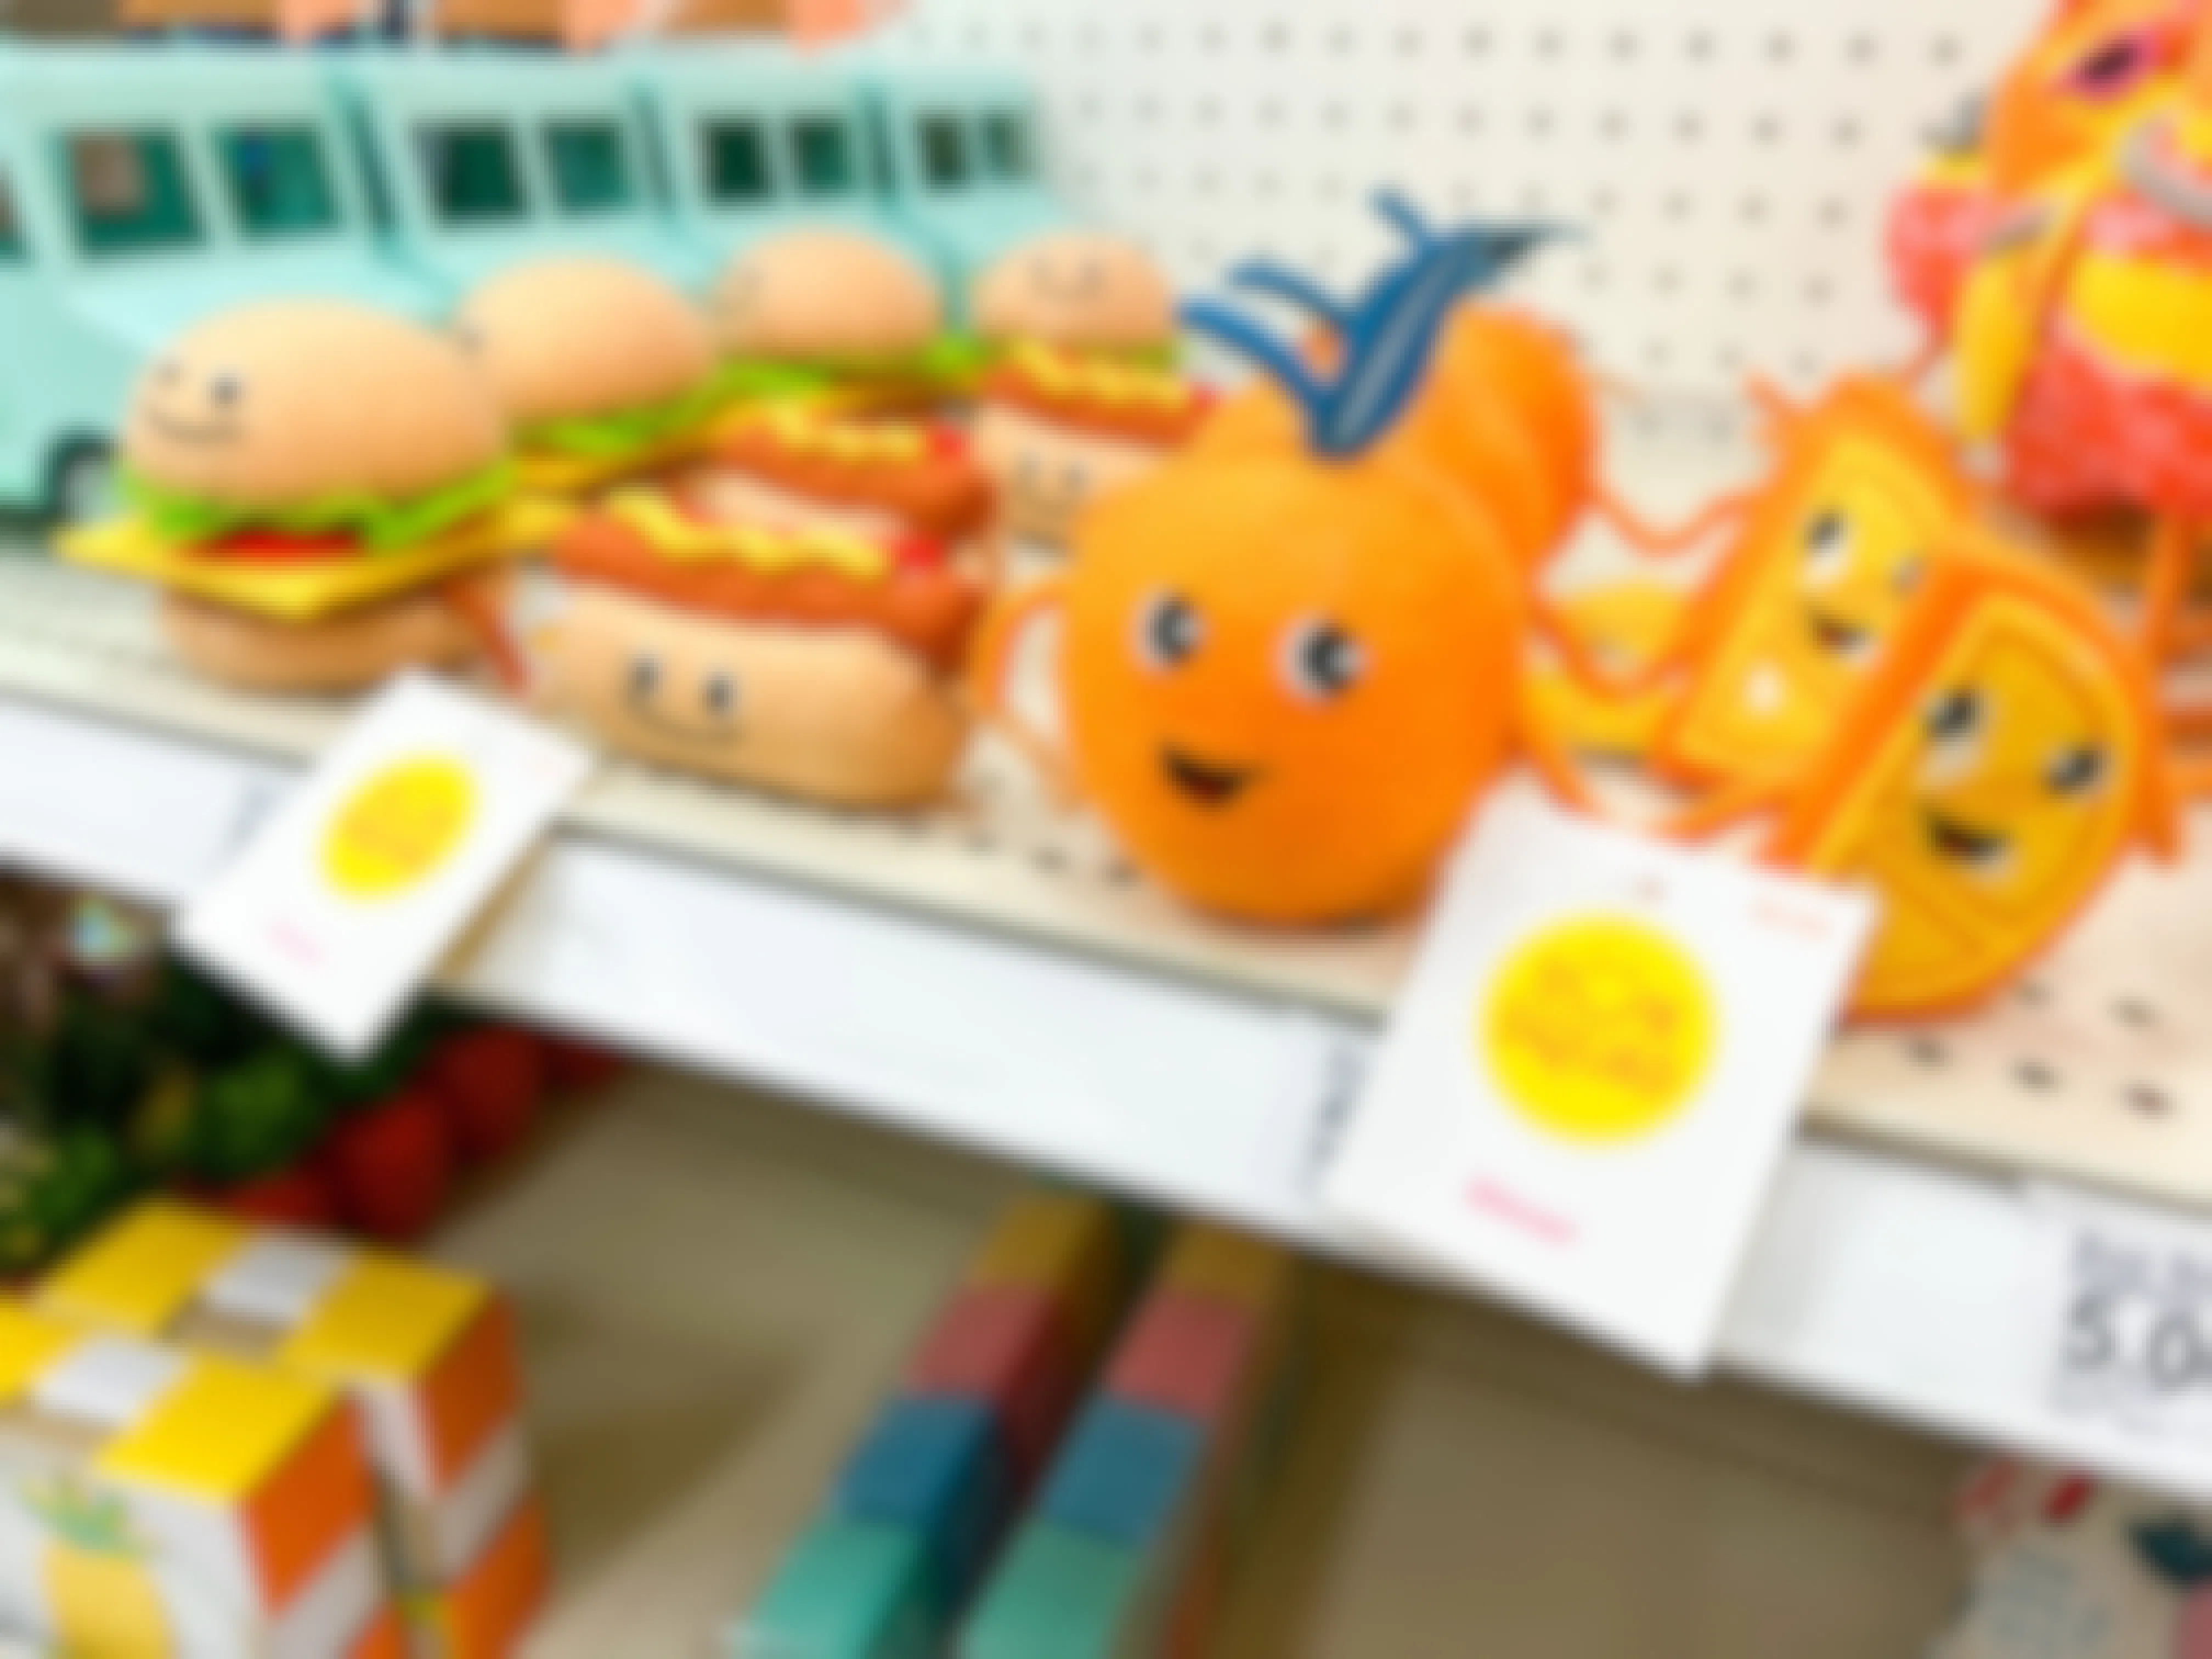 the hamburger and hot dog and the orange and orange slice felt duos on the shelf at Target